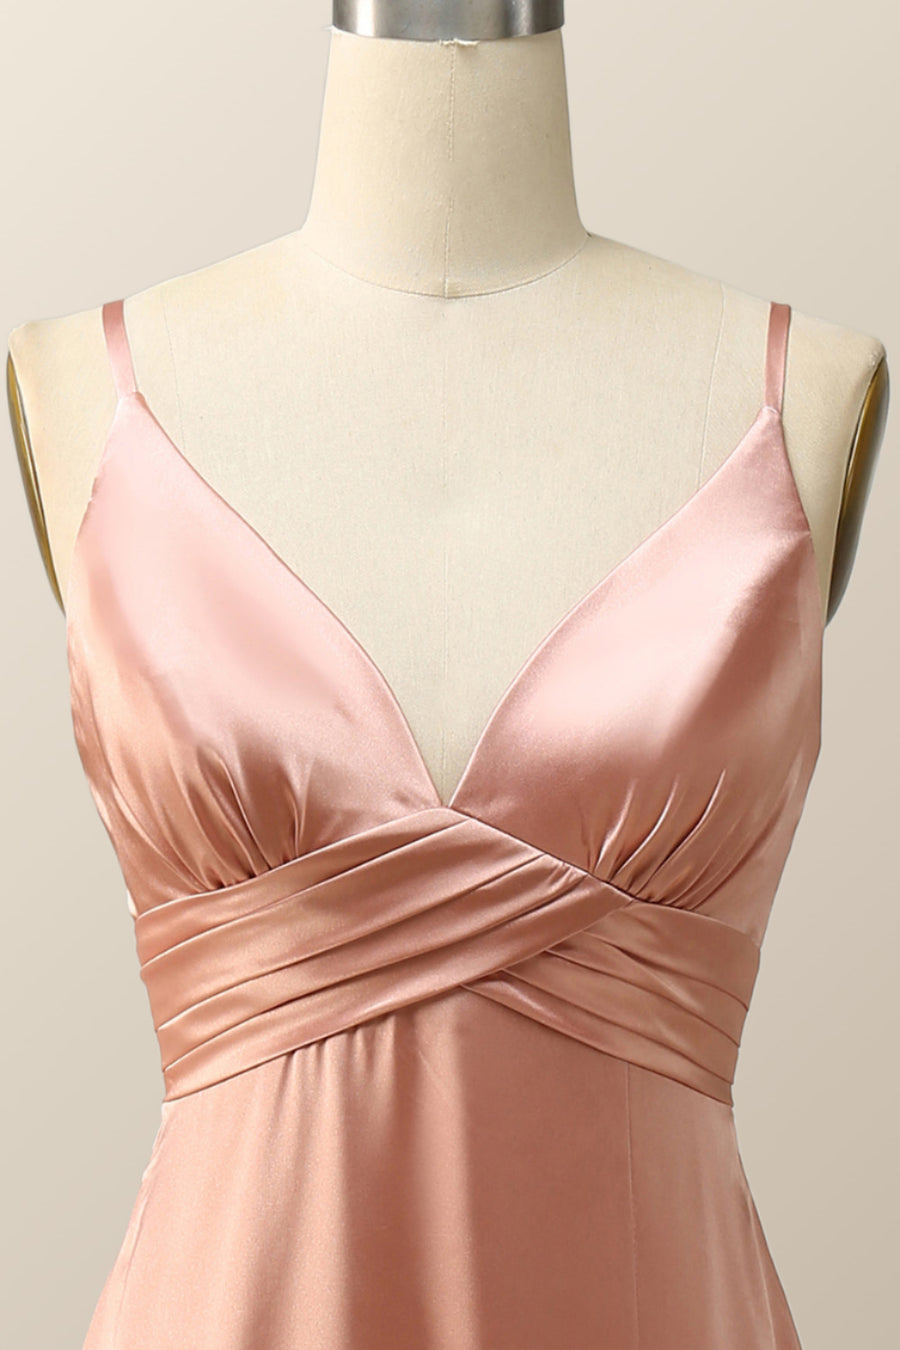 Empire Blush Silk A-line Long Bridesmaid Dress with Slit